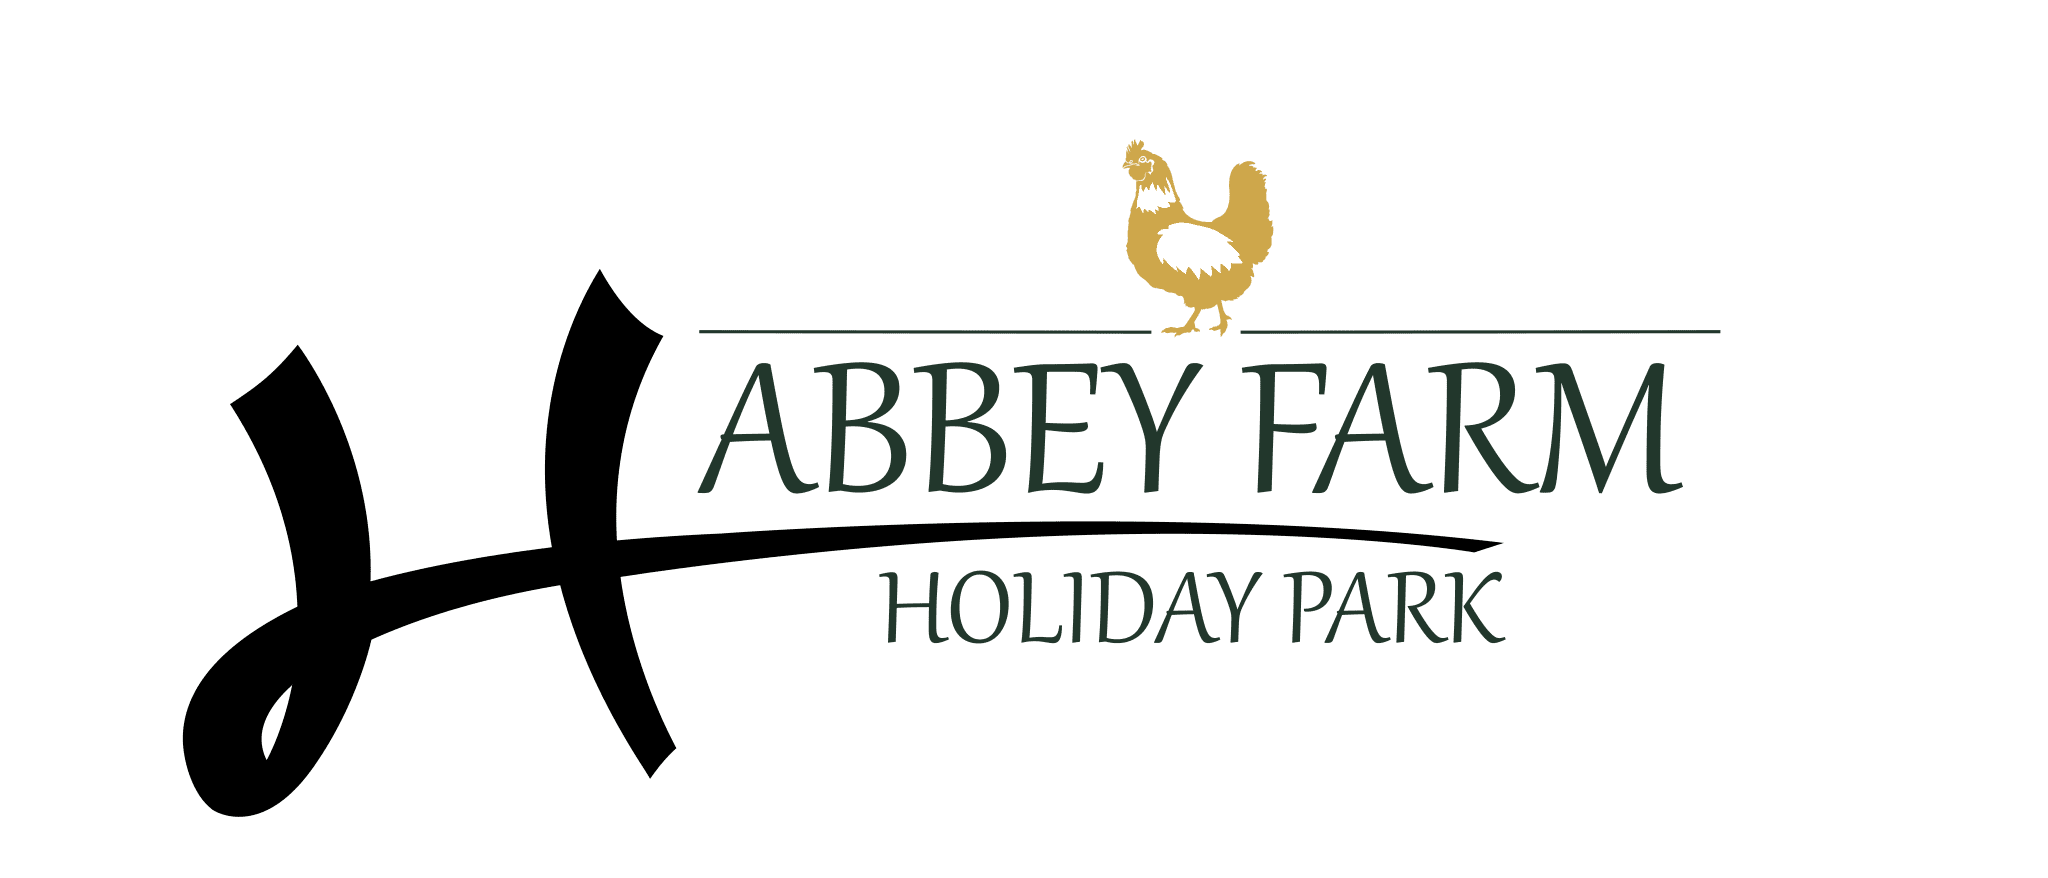 Abbey Farm Holiday Park